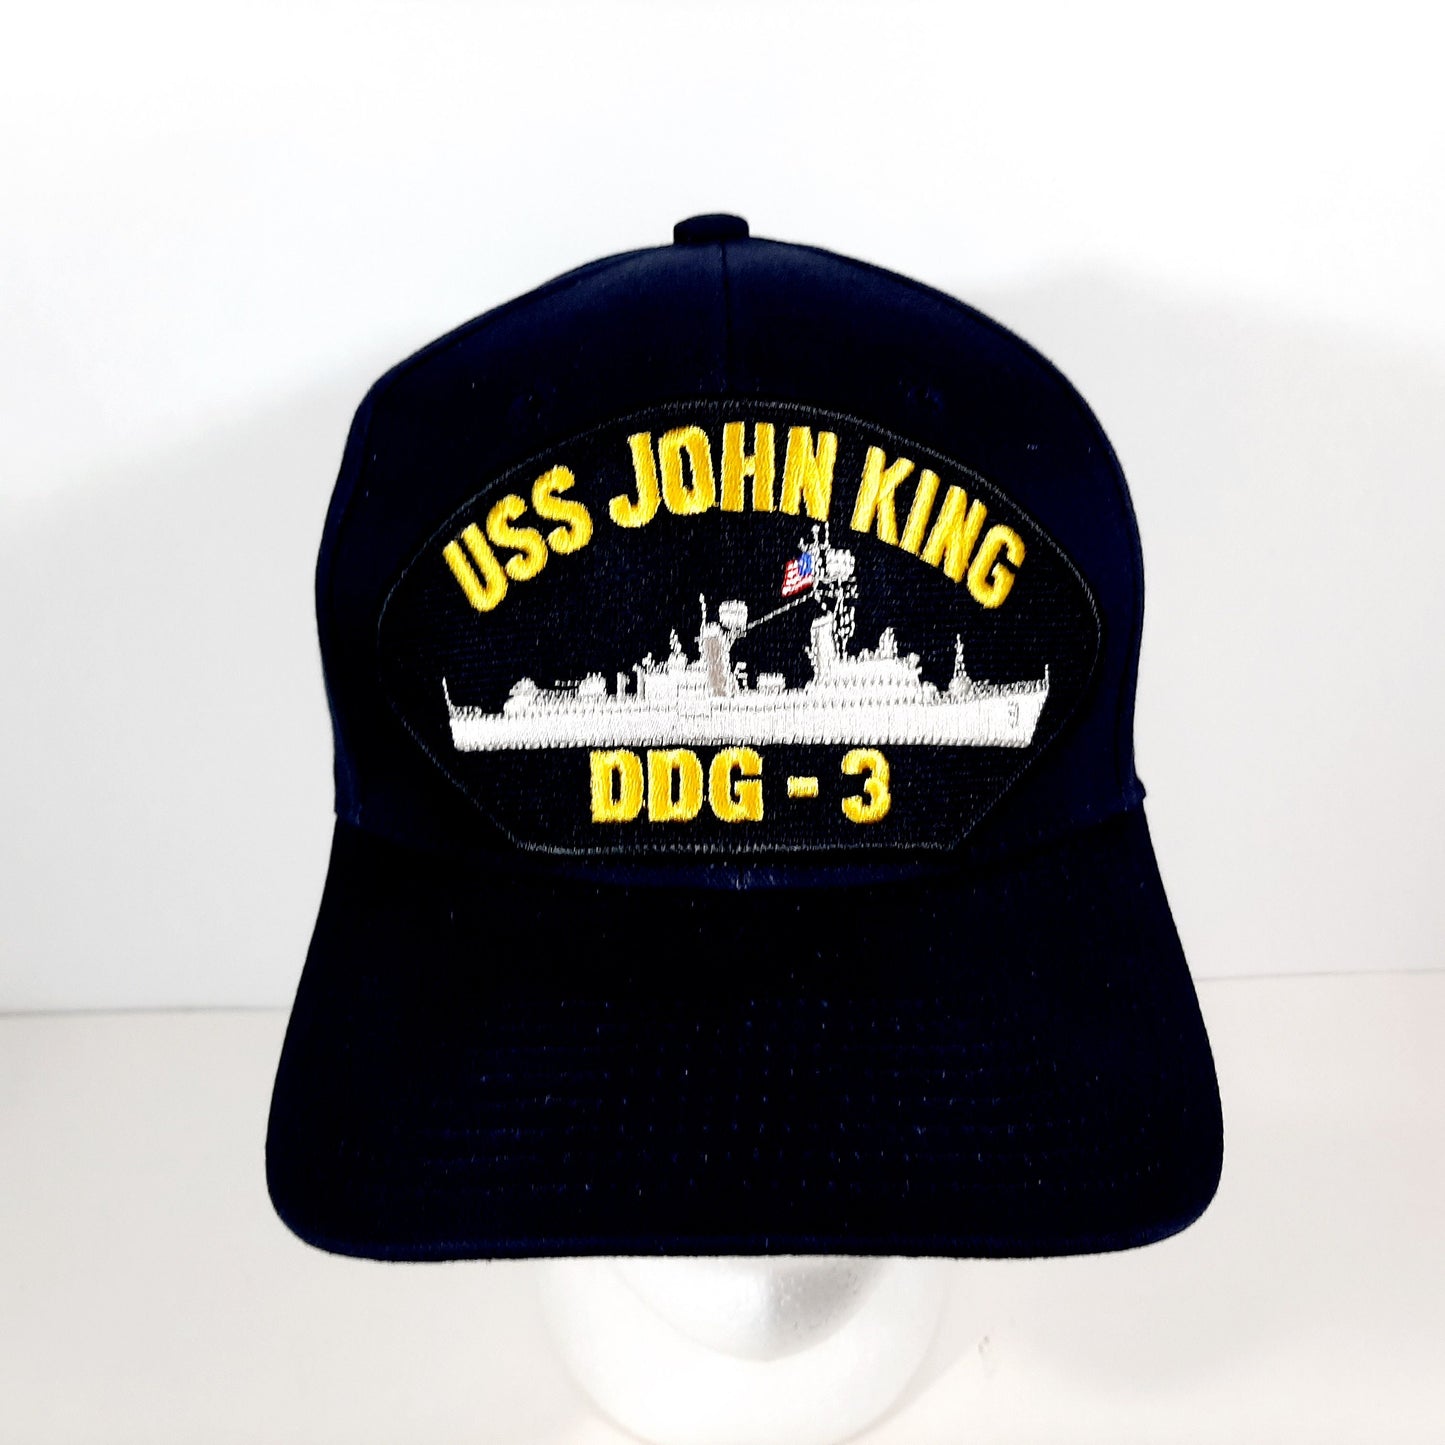 USS John King DDG-3 Patch Hat Baseball Cap Adjustable Navy Blue